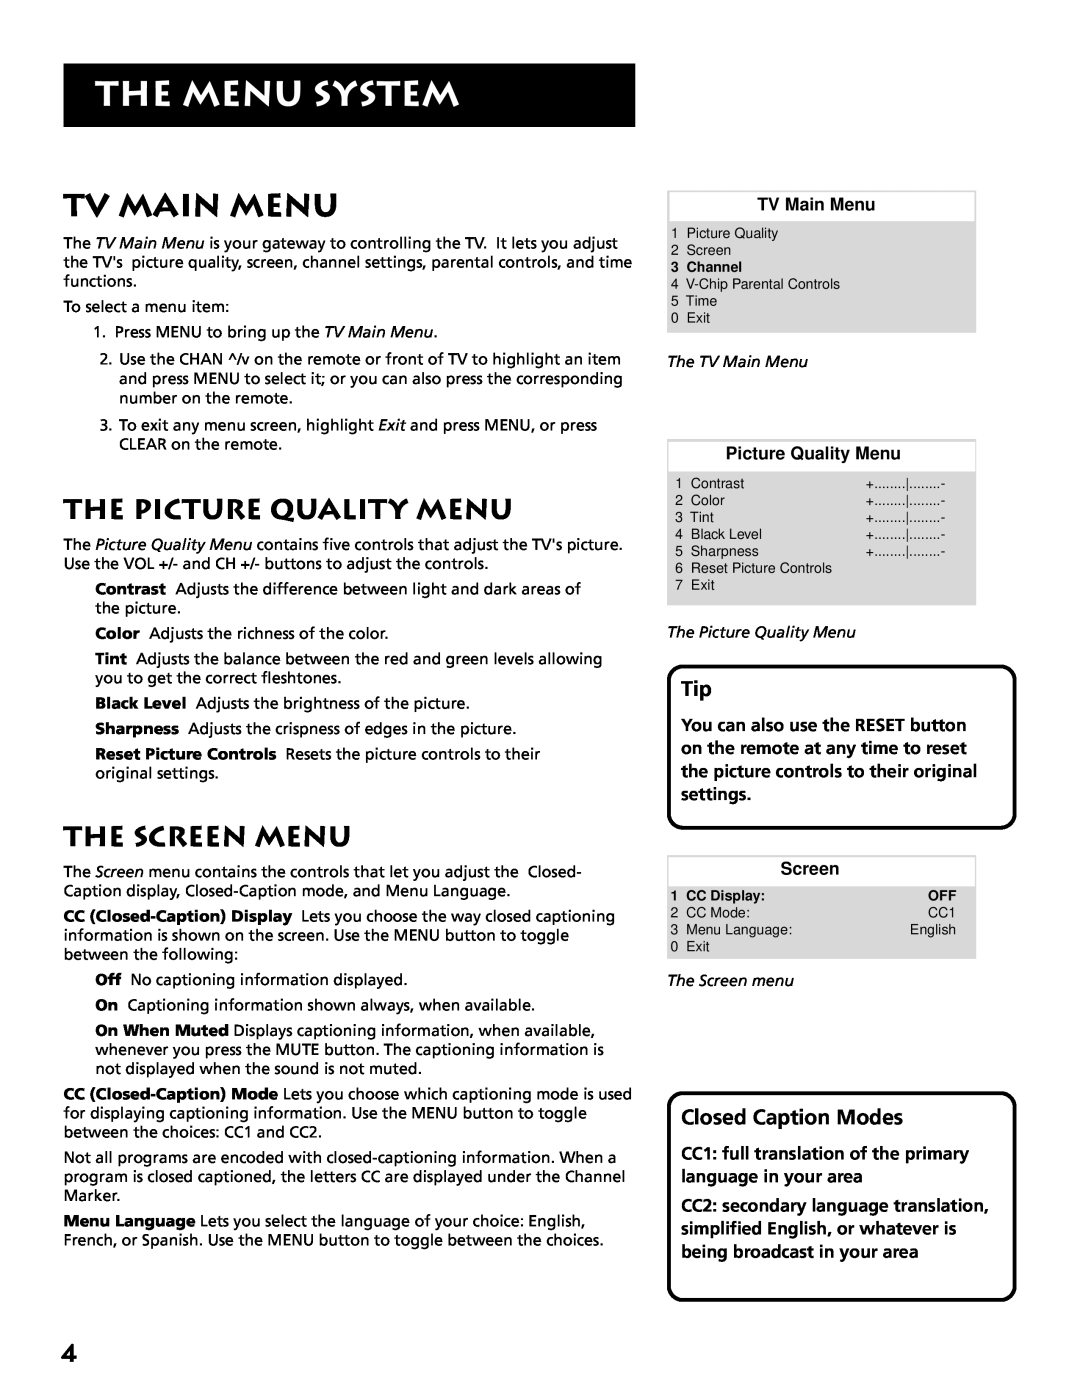 RCA E13319 The Menu System, Tv Main Menu, The Picture Quality Menu, The Screen Menu, Closed Caption Modes, TV Main Menu 